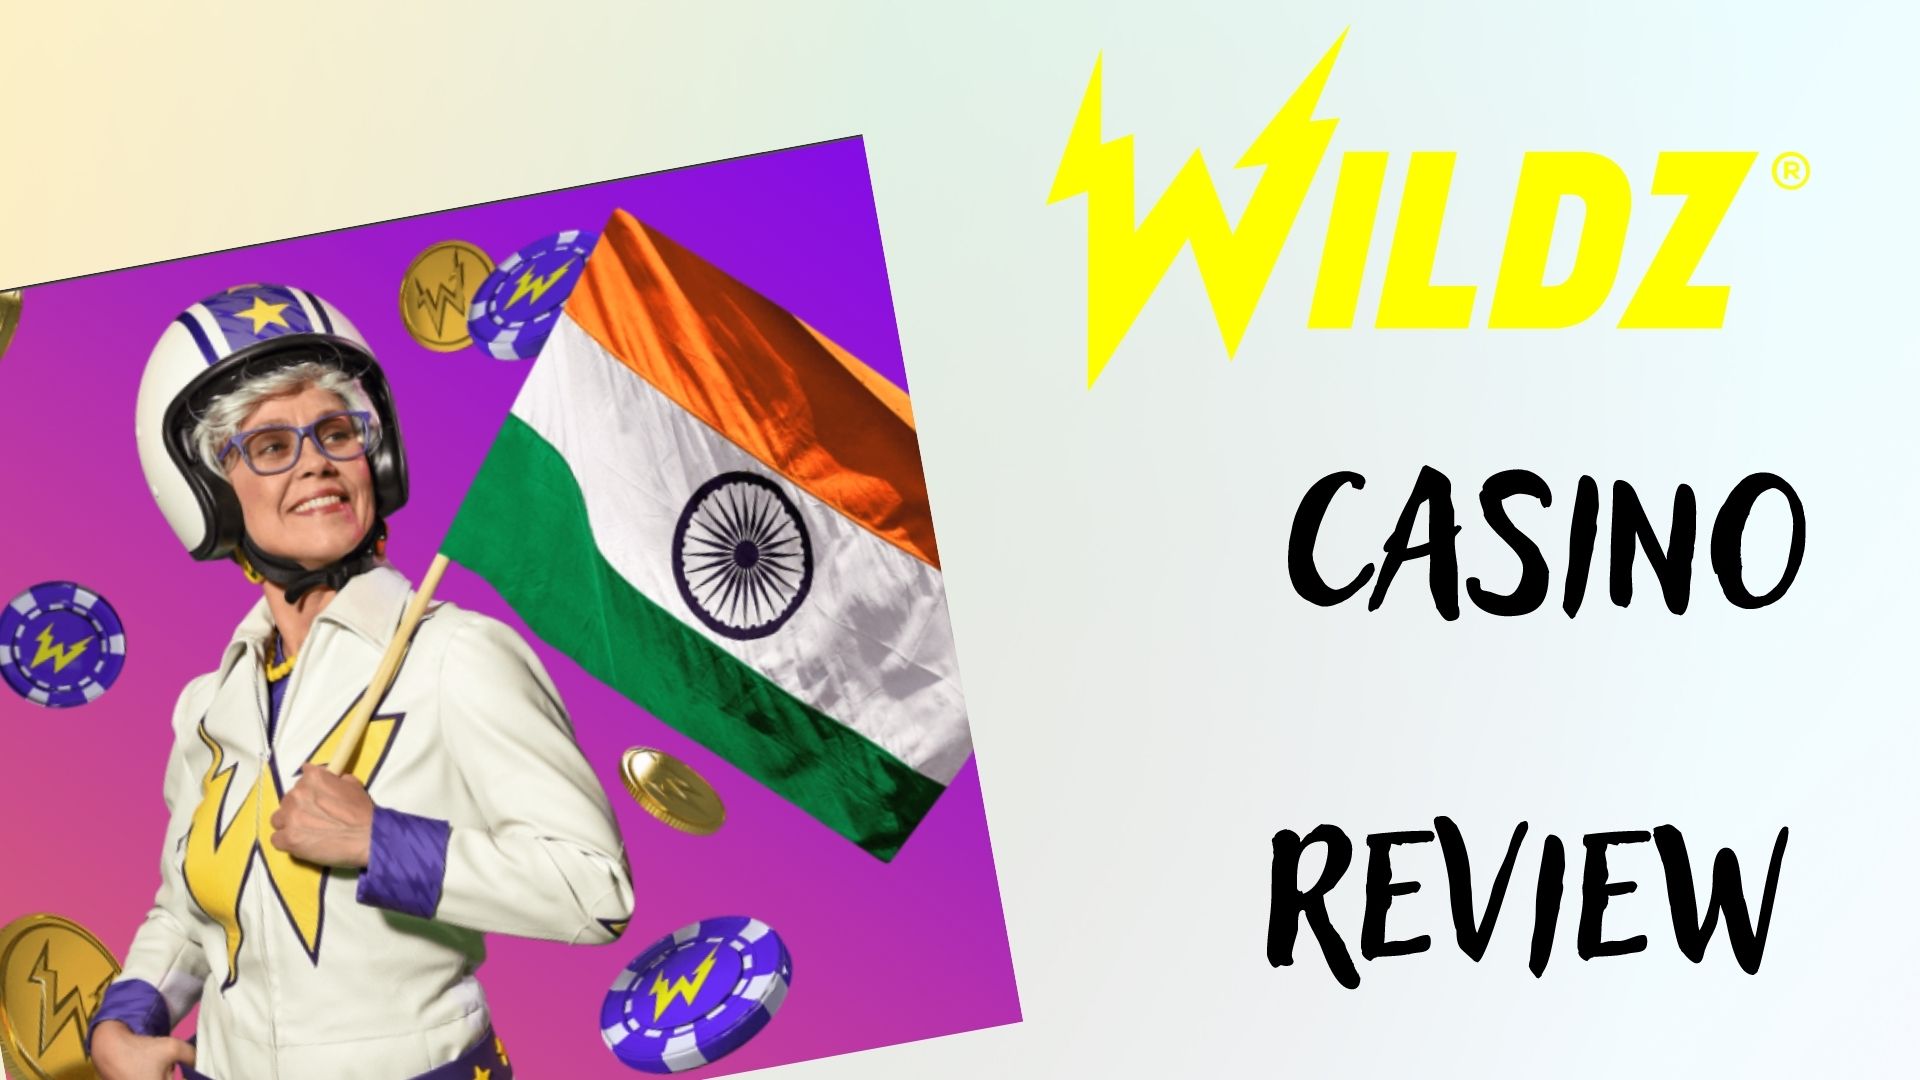 Wildz Casino Review 2022